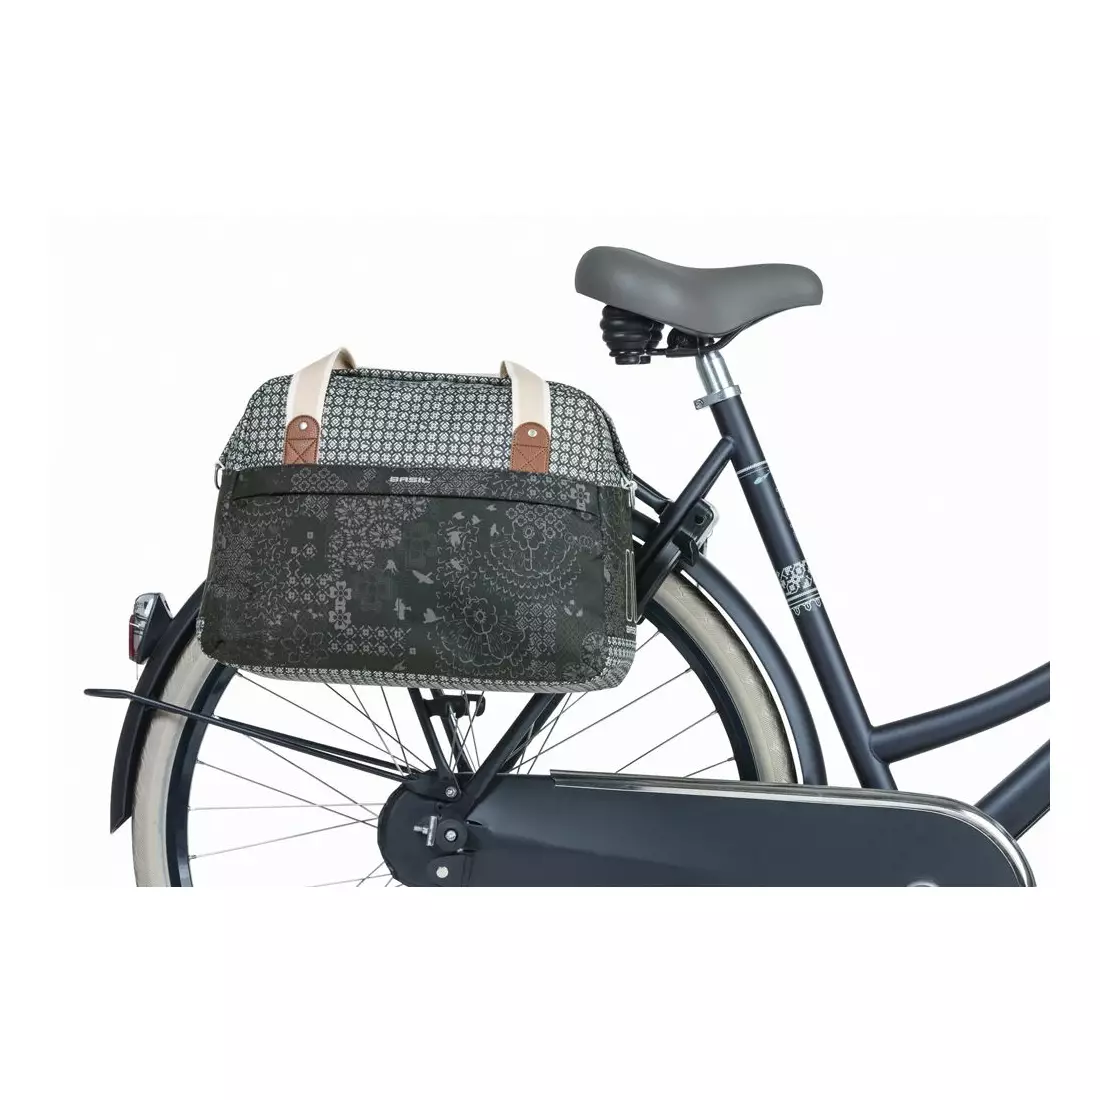 BASIL einzelne hintere Fahrradtasche boheme carry all bag 18L charcoal BAS-18009